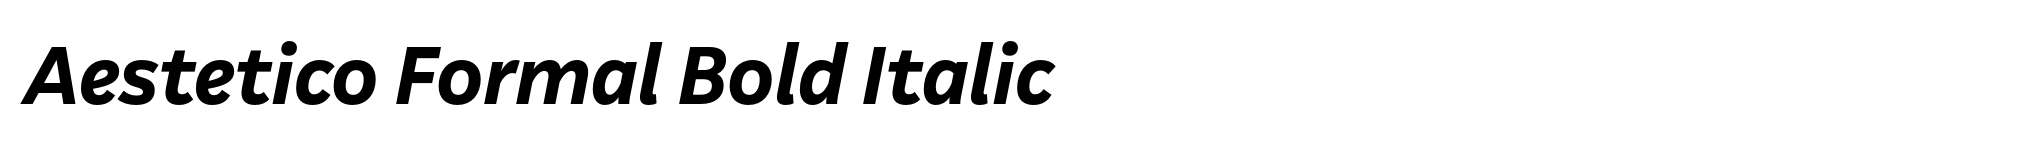 Aestetico Formal Bold Italic image